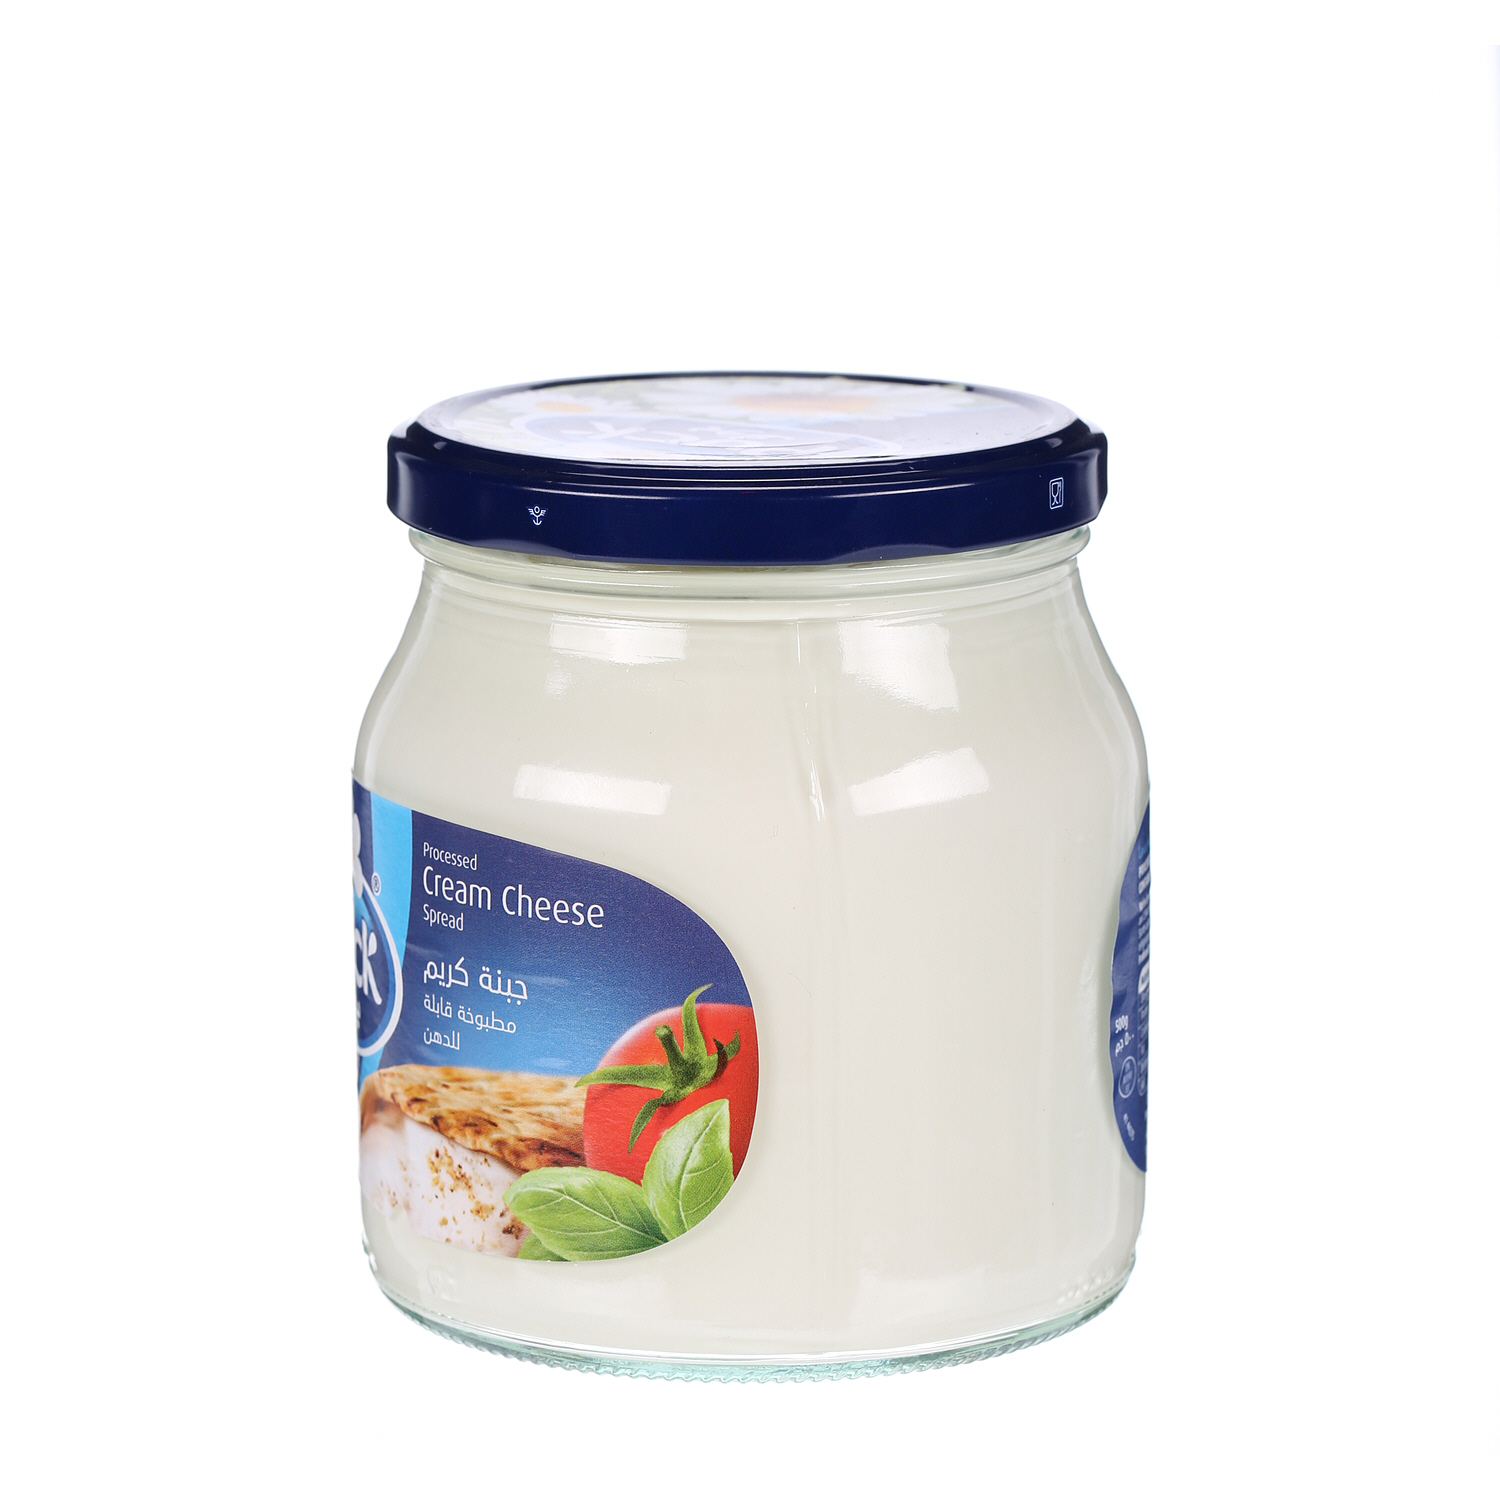 Puck Cheese Cream Jar 500gm